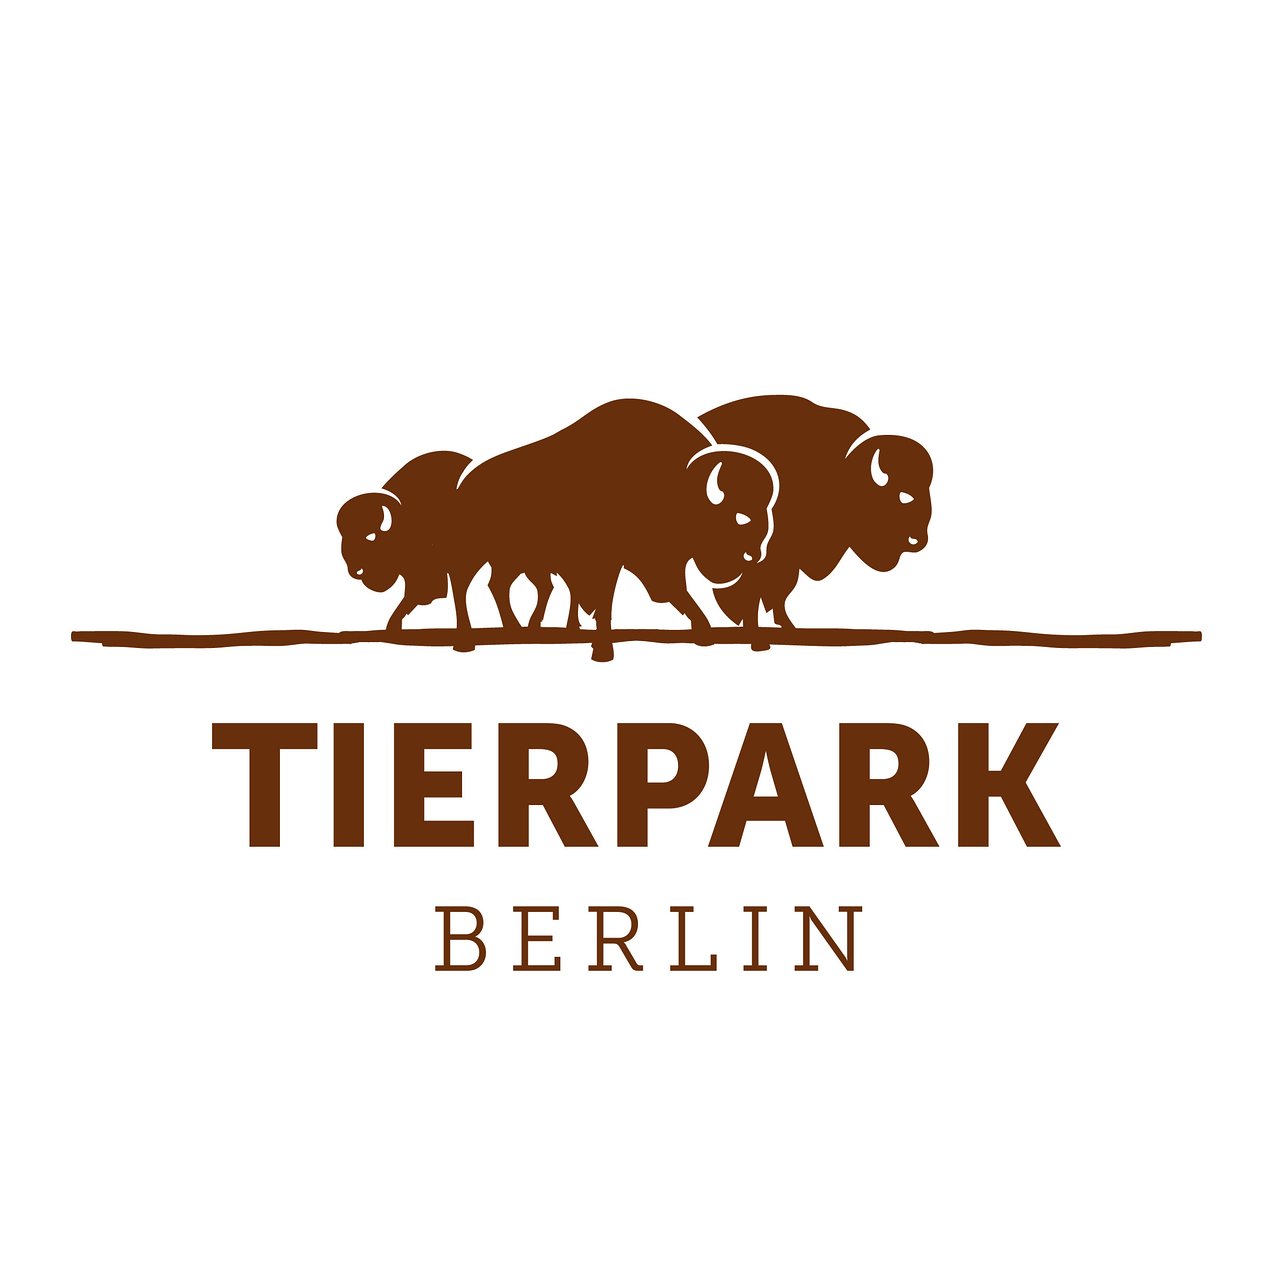 Berlin Garten Der Welt Elegant Tierpark Berlin 2020 All You Need to Know before You Go